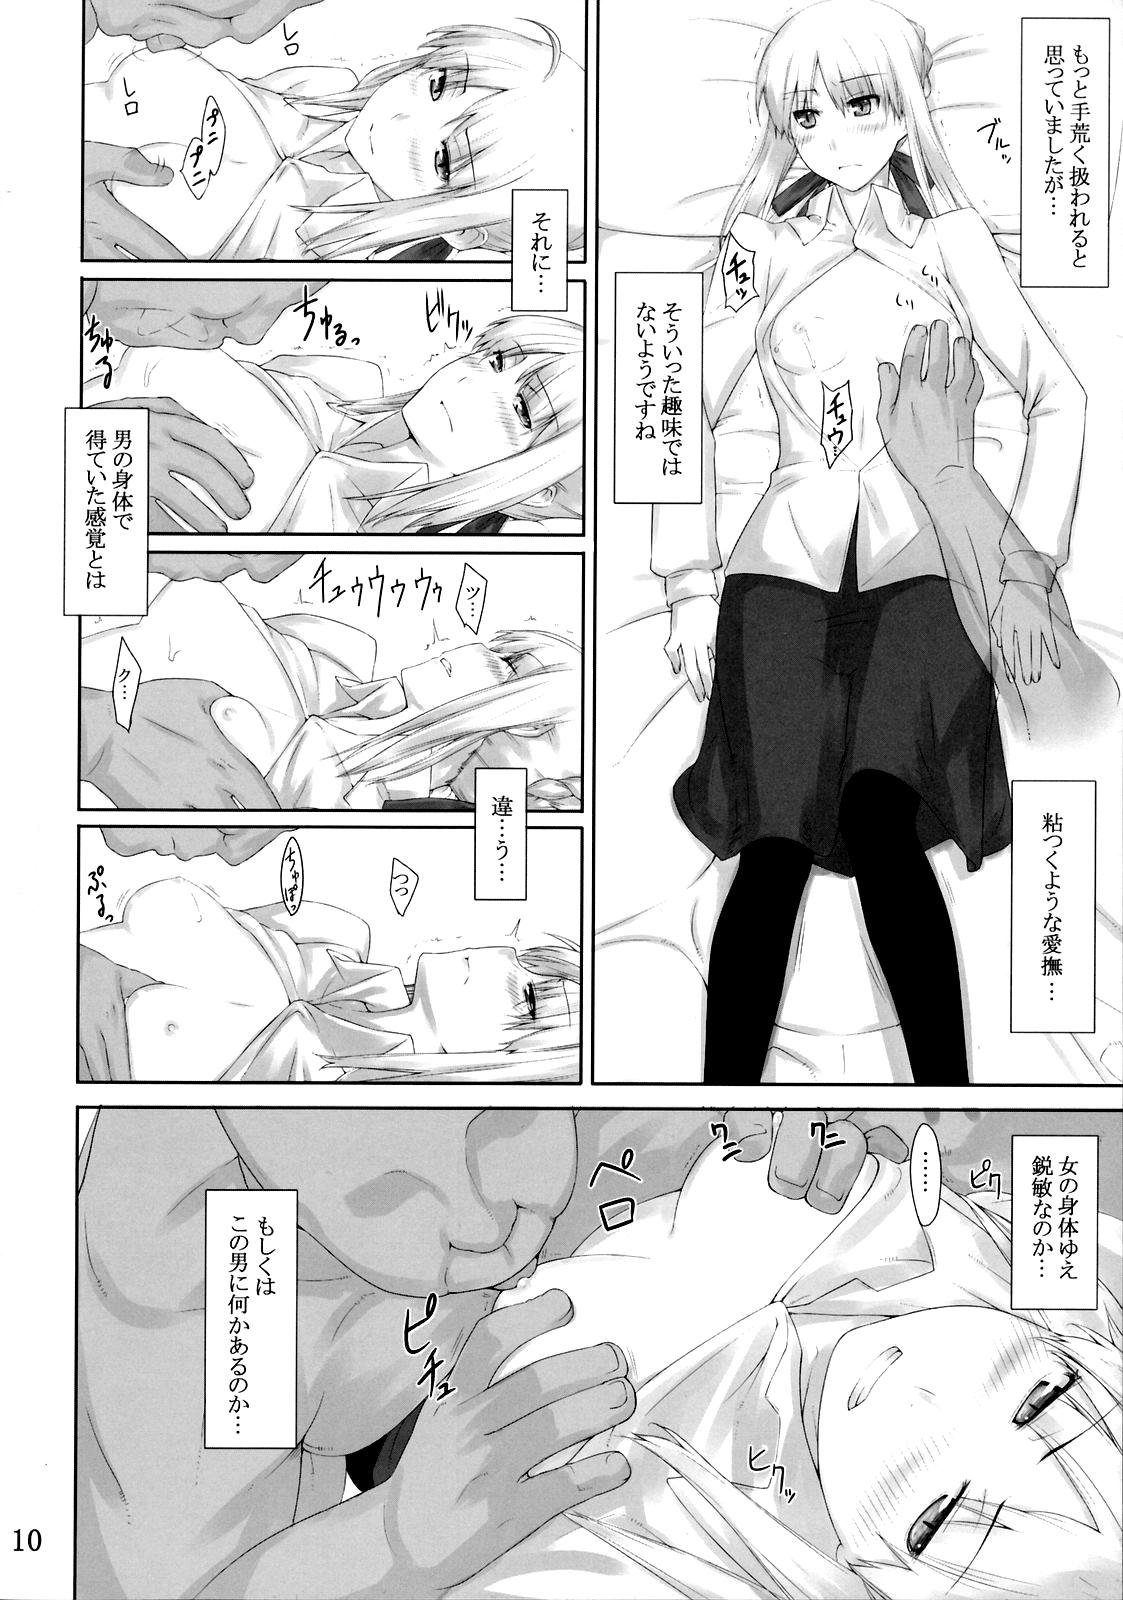 Cream Tohsaka-ke no Kakei Jijou 3 - Fate stay night Caught - Page 9